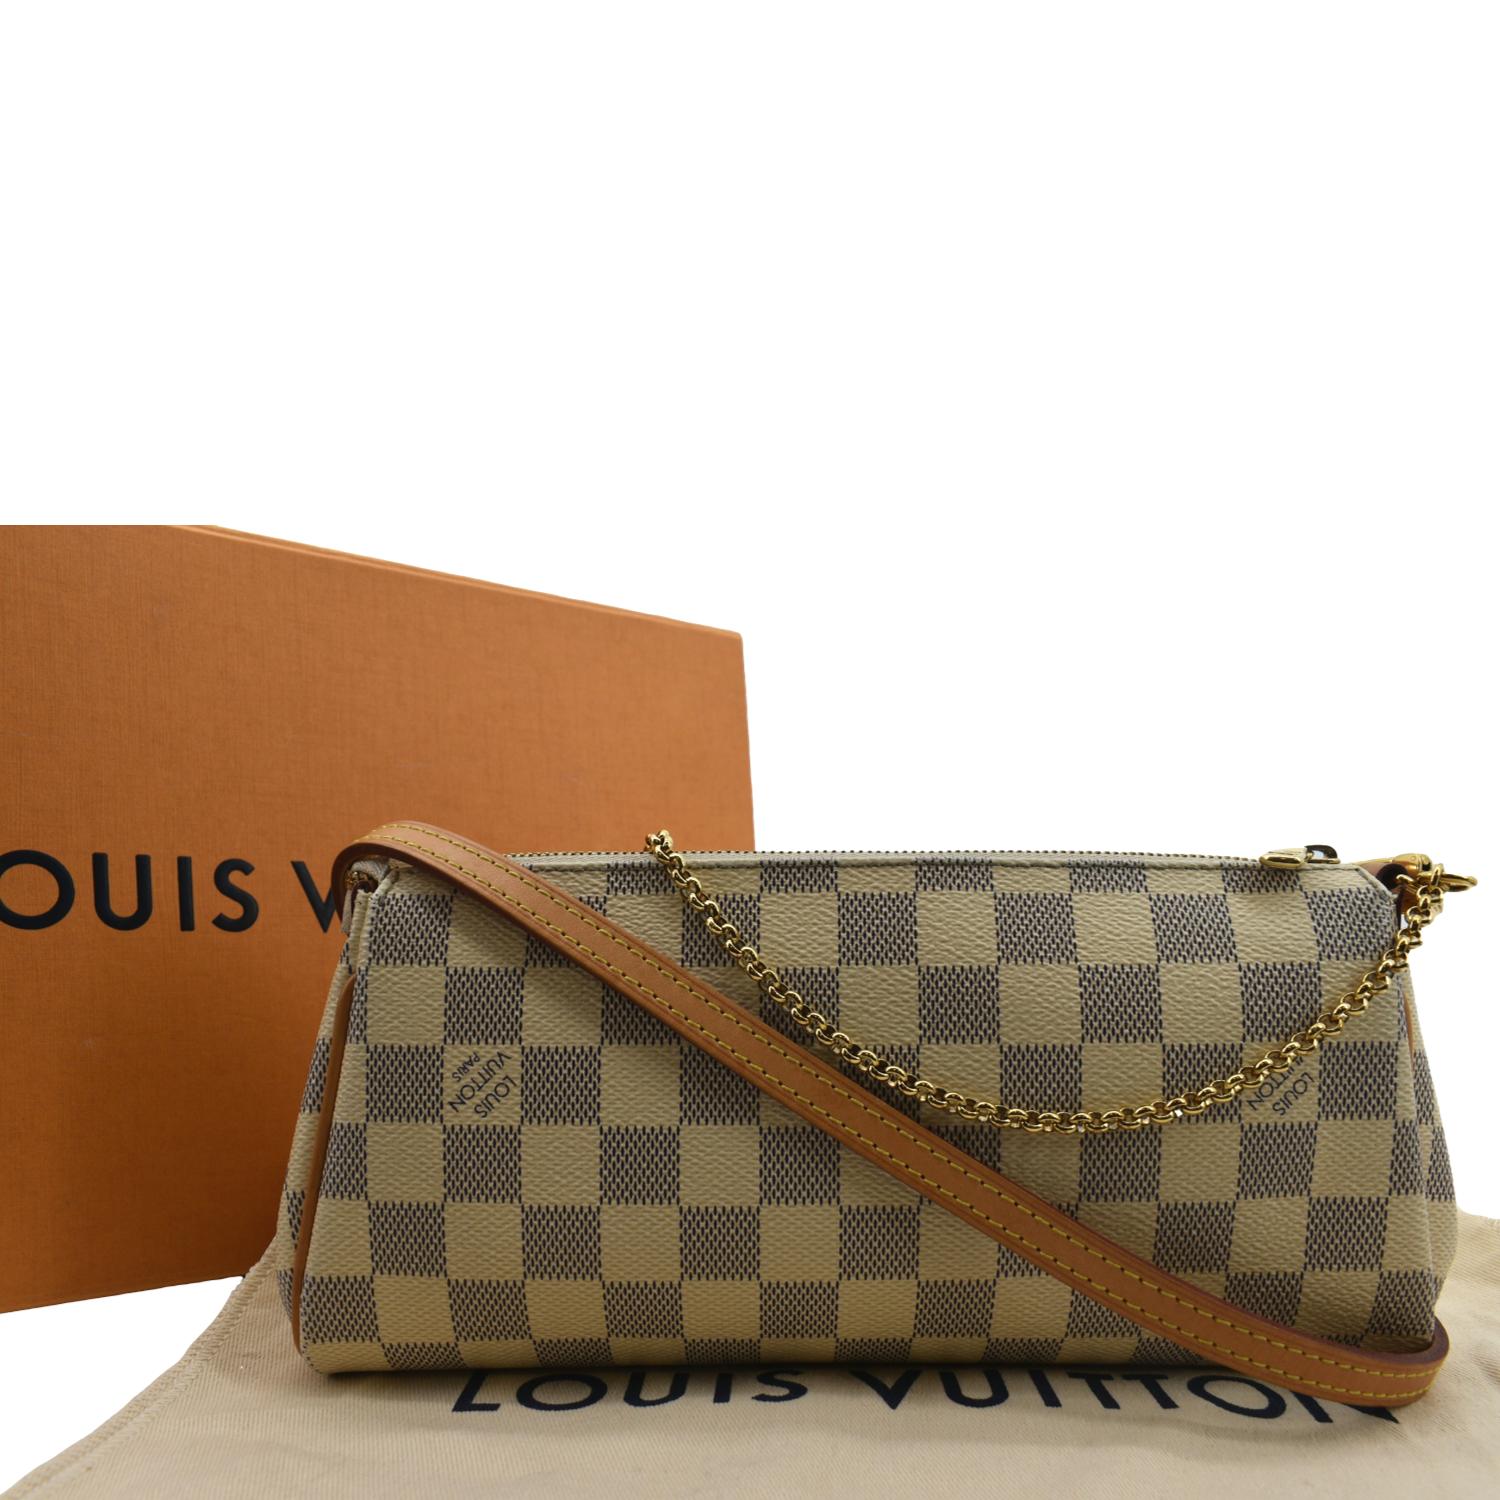 Louis Vuitton Eva Clutch With Strap Damier Azur – Coco Approved Studio